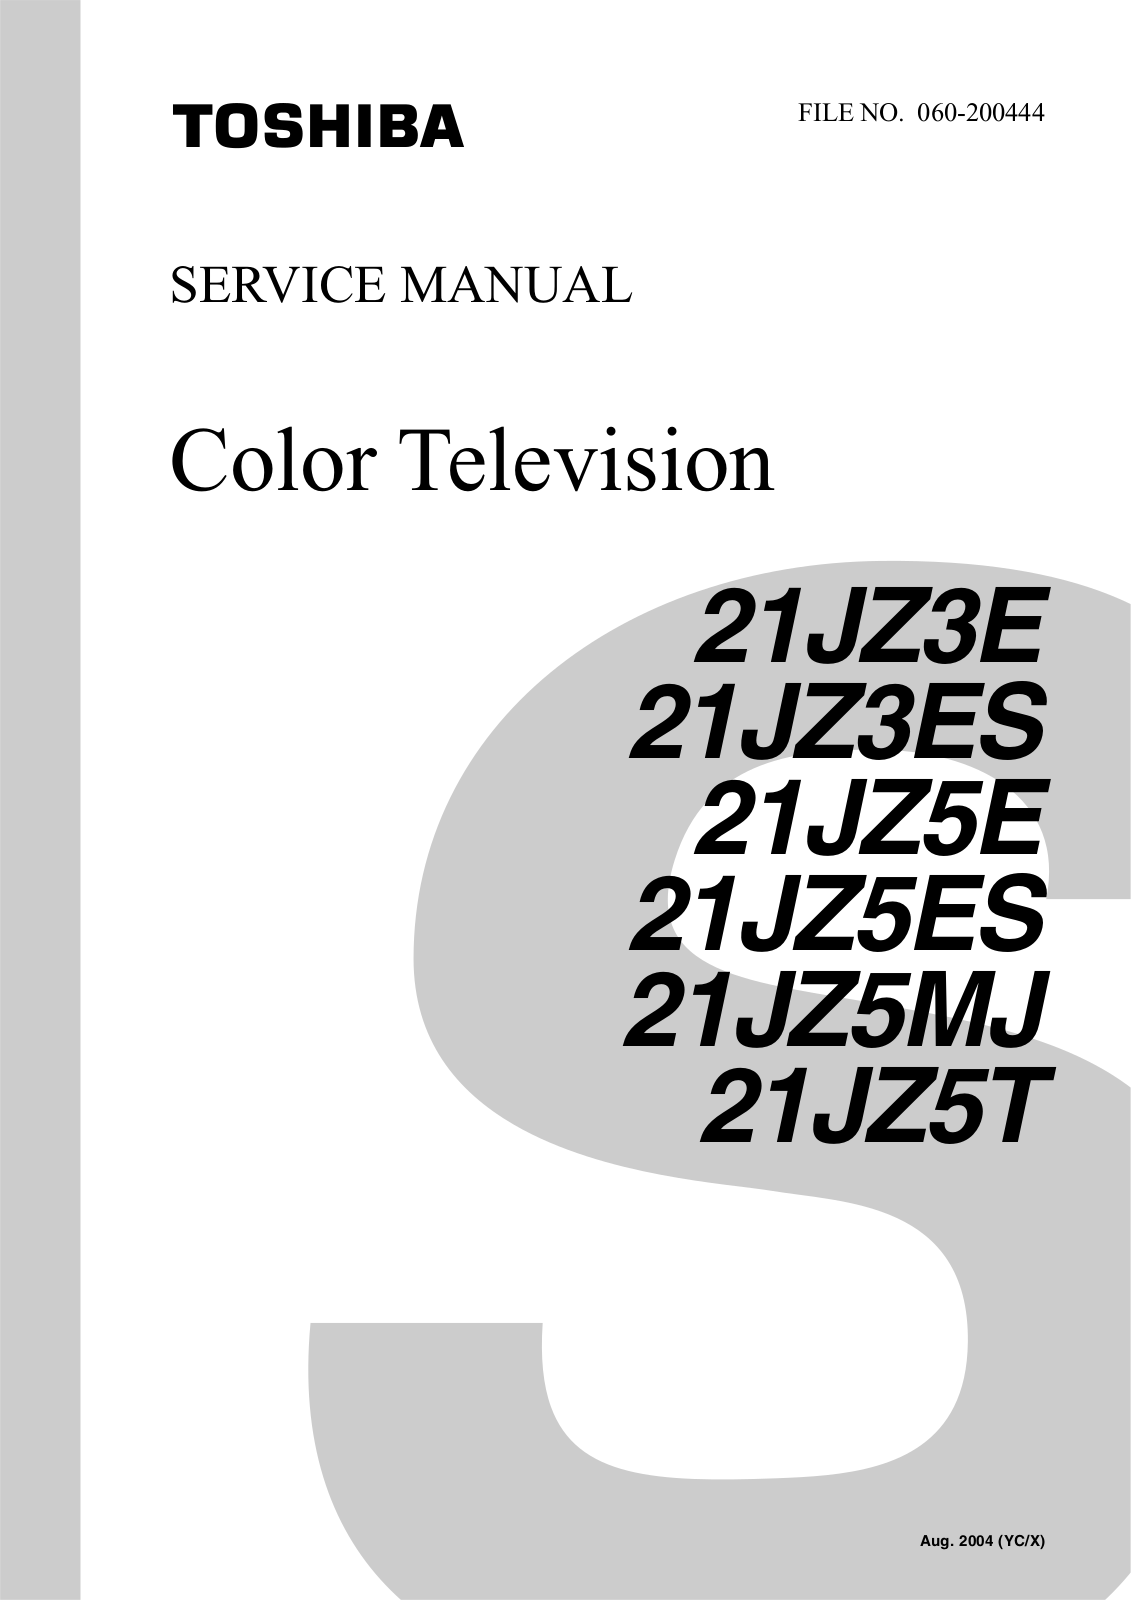 TOSHIBA 21JZ3E, 21JZ3ES, 21JZ5ES, 21JZ5M, 21JZ5E Service Manual